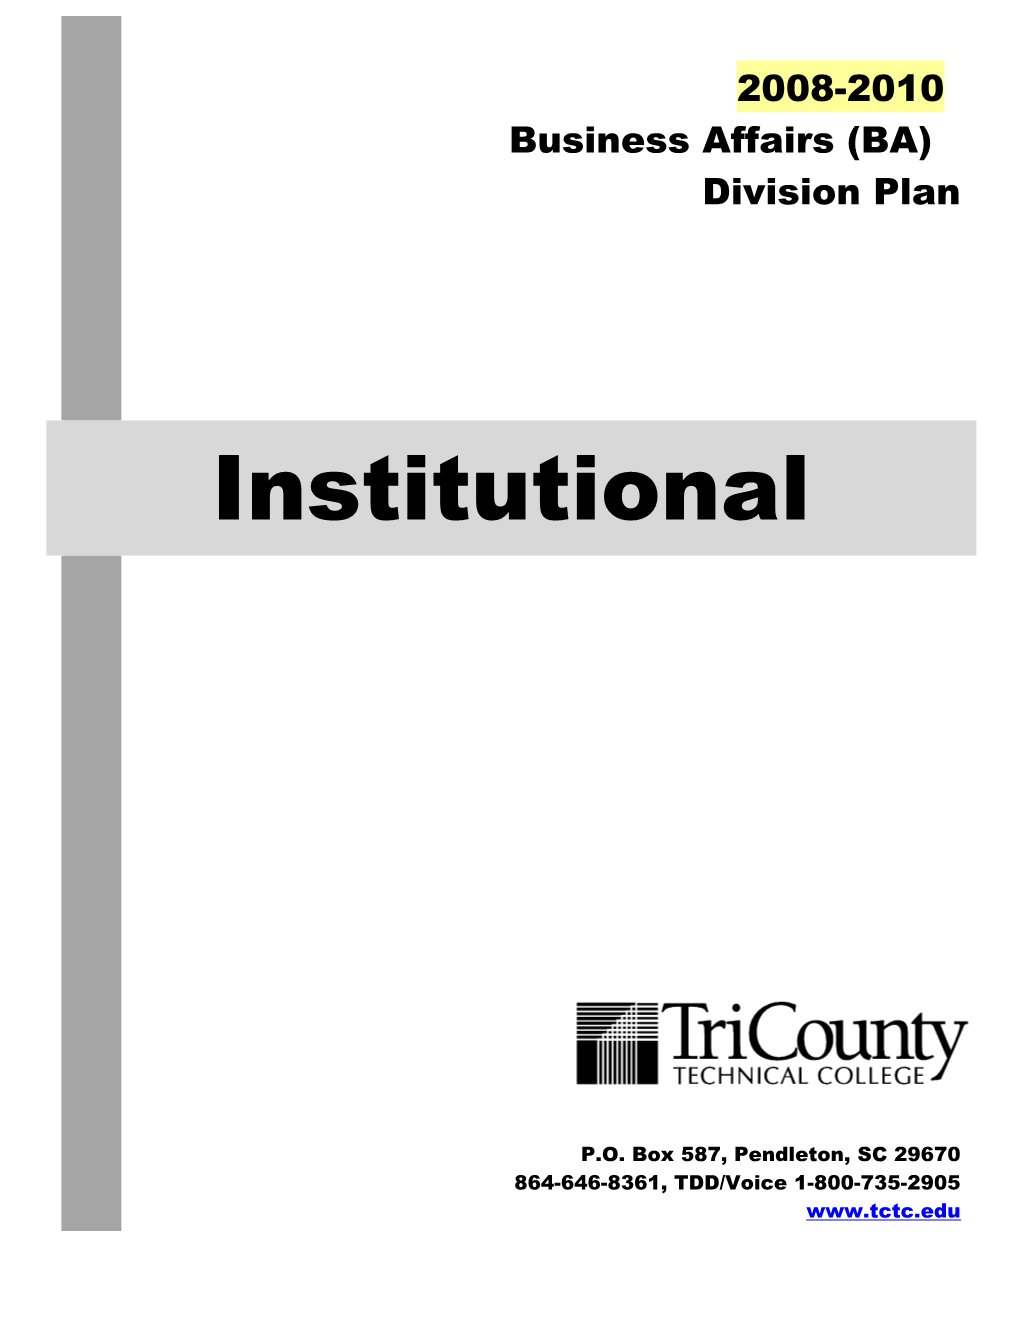 2006-07 College Priorities, Initiatives, and Activities